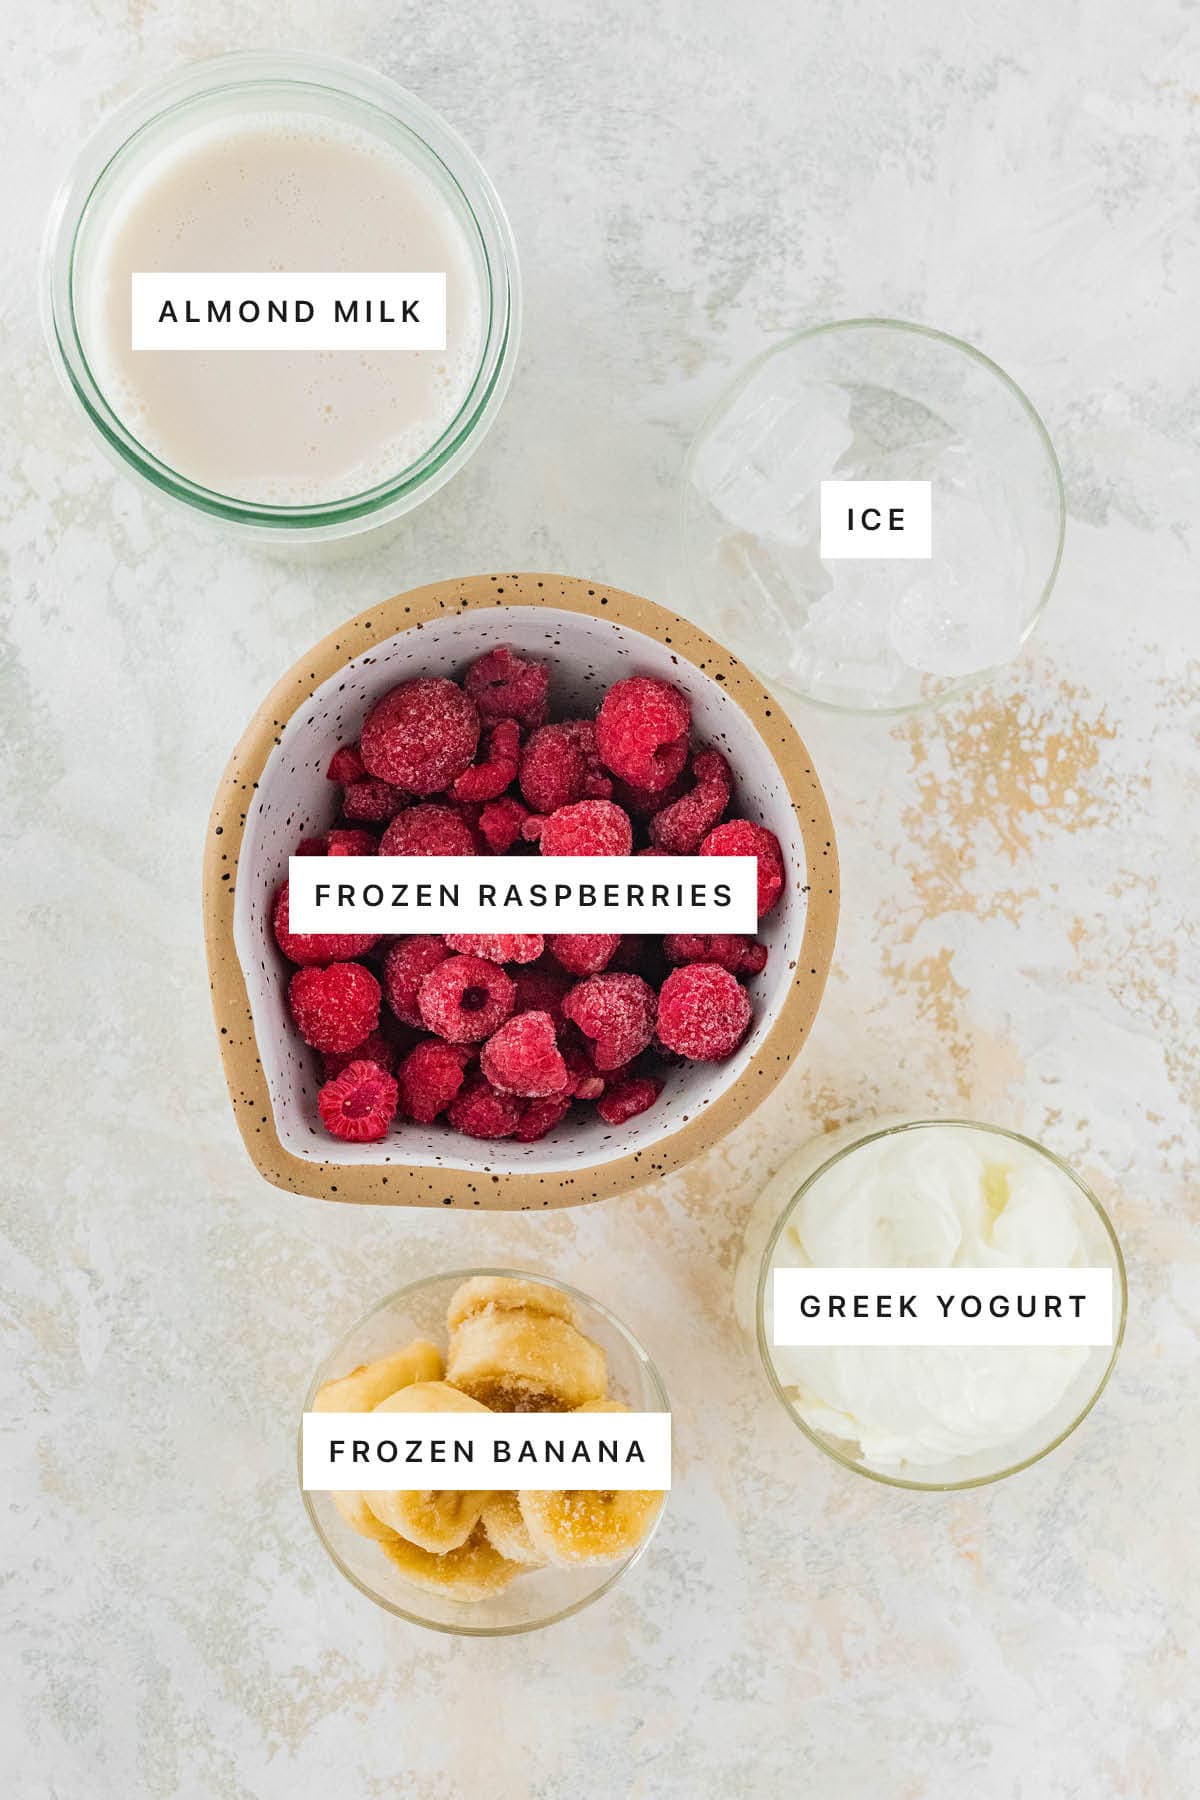 Ingredients measured out to make Raspberry Smoothie: almond milk, ice, frozen raspberries, frozen banana and Greek yogurt.